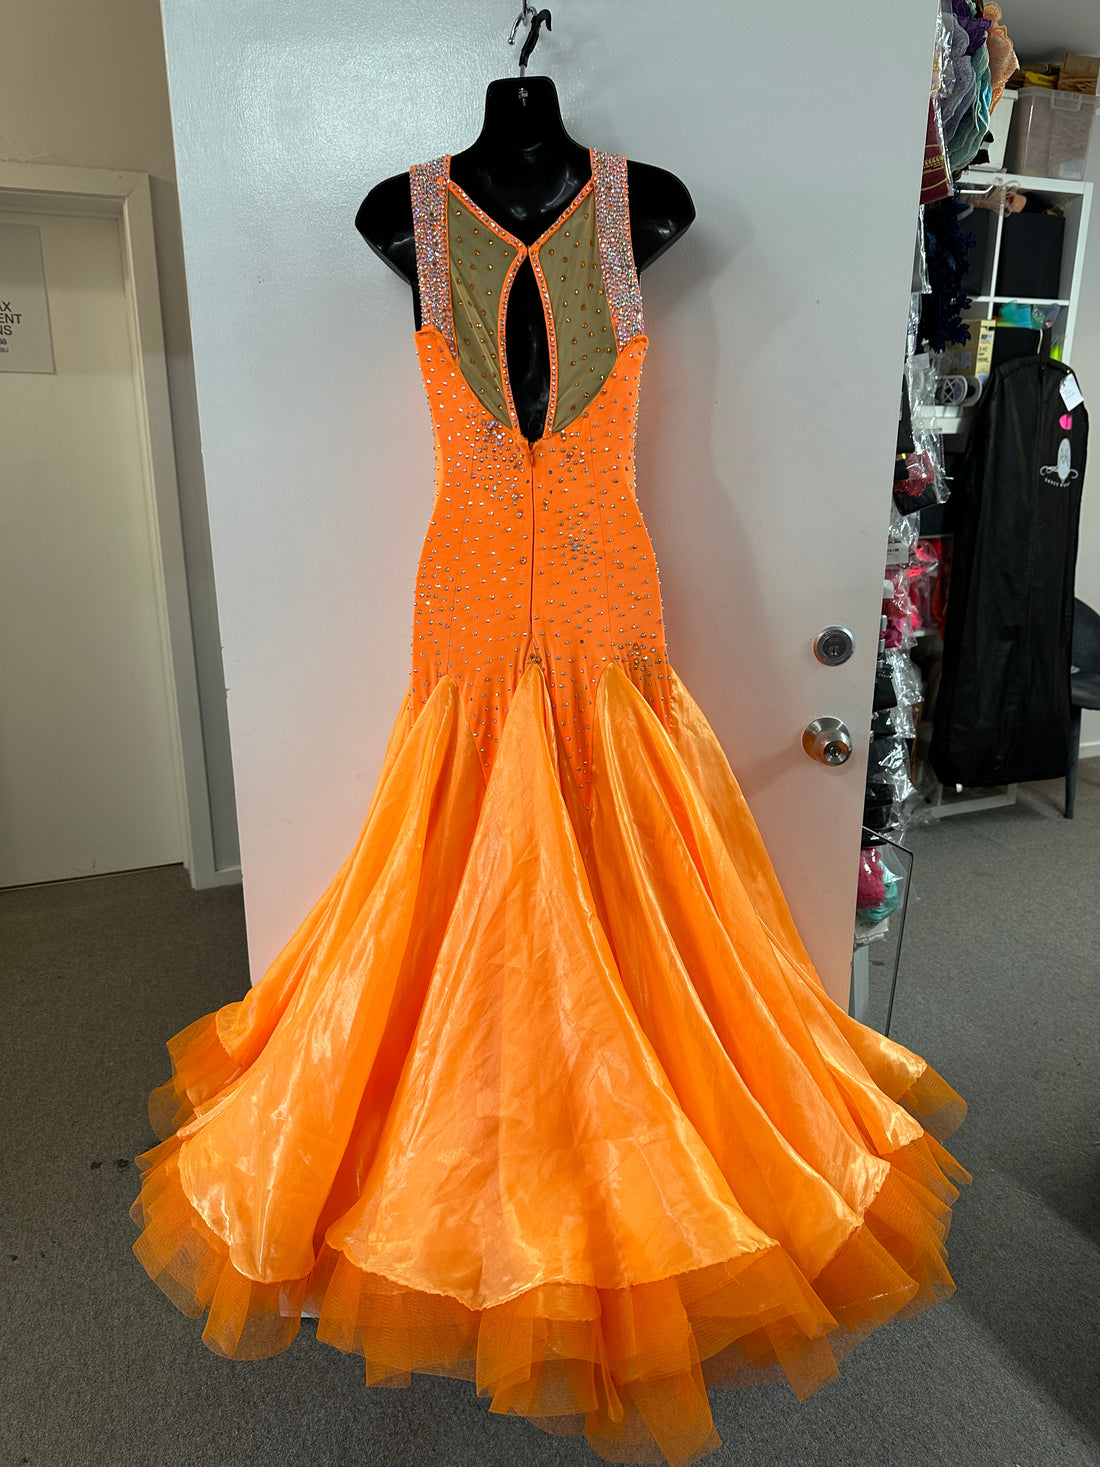 Pre Loved Orange Ballroom Dress (Size 10-12)